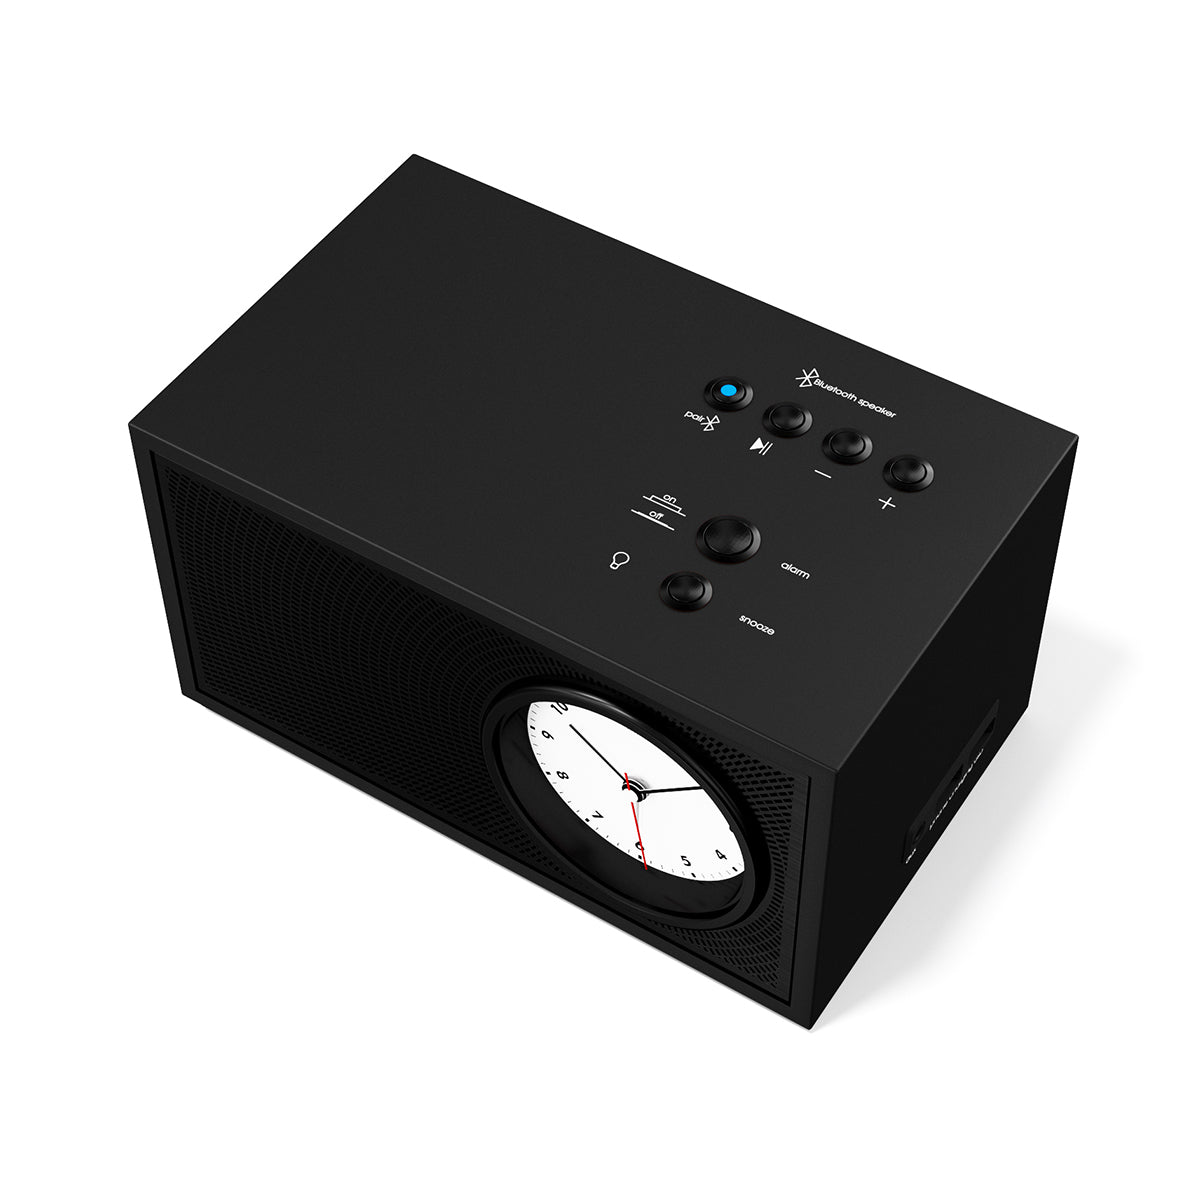 Downtown Black Songbird Bluetooth Speaker Alarm Clock - DB5B85W